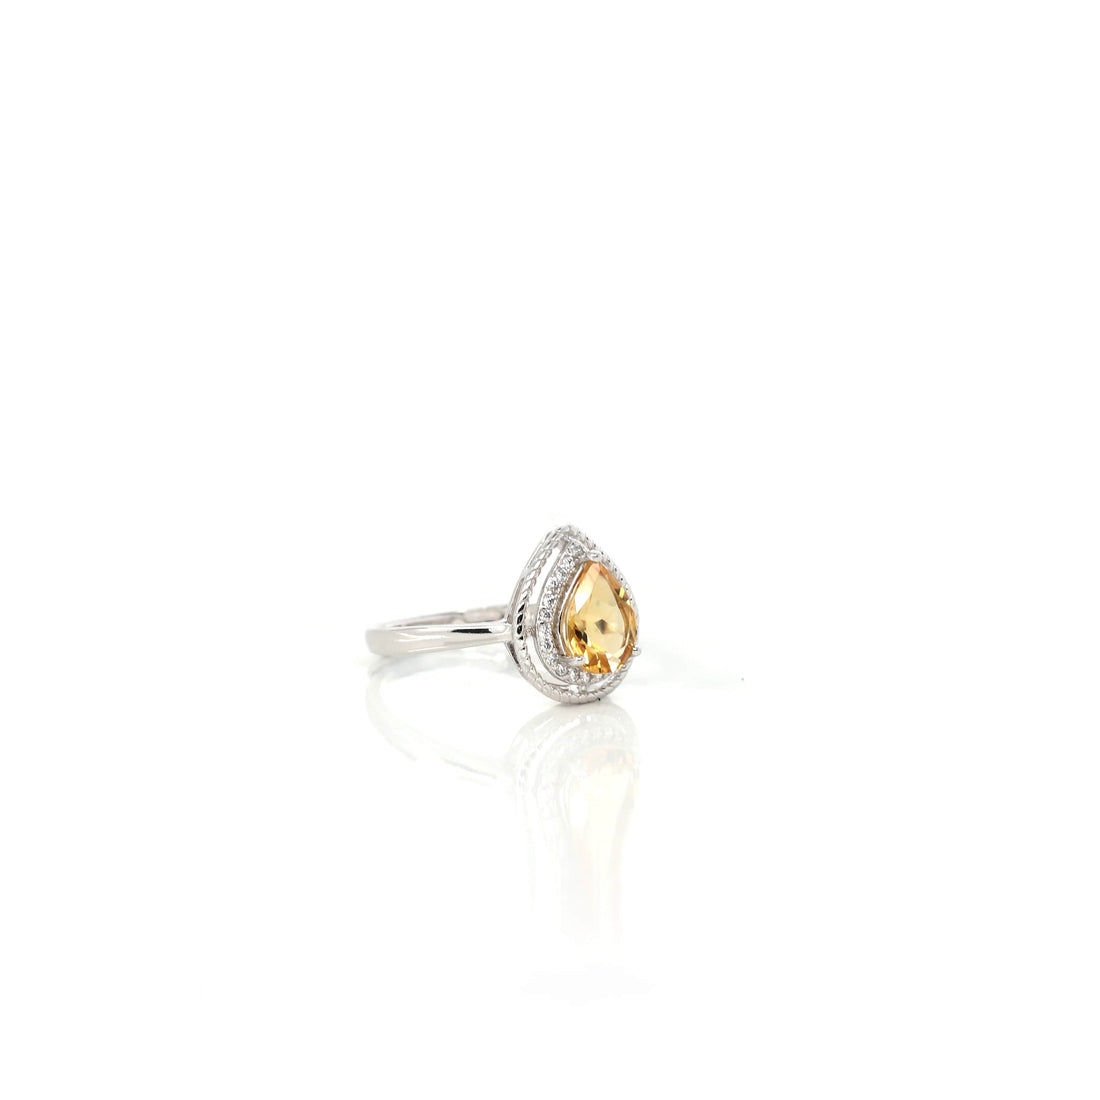 Baikalla Jewelry Gemstone Ring Sterling Silver Tear Drop Cut Citrine Ring